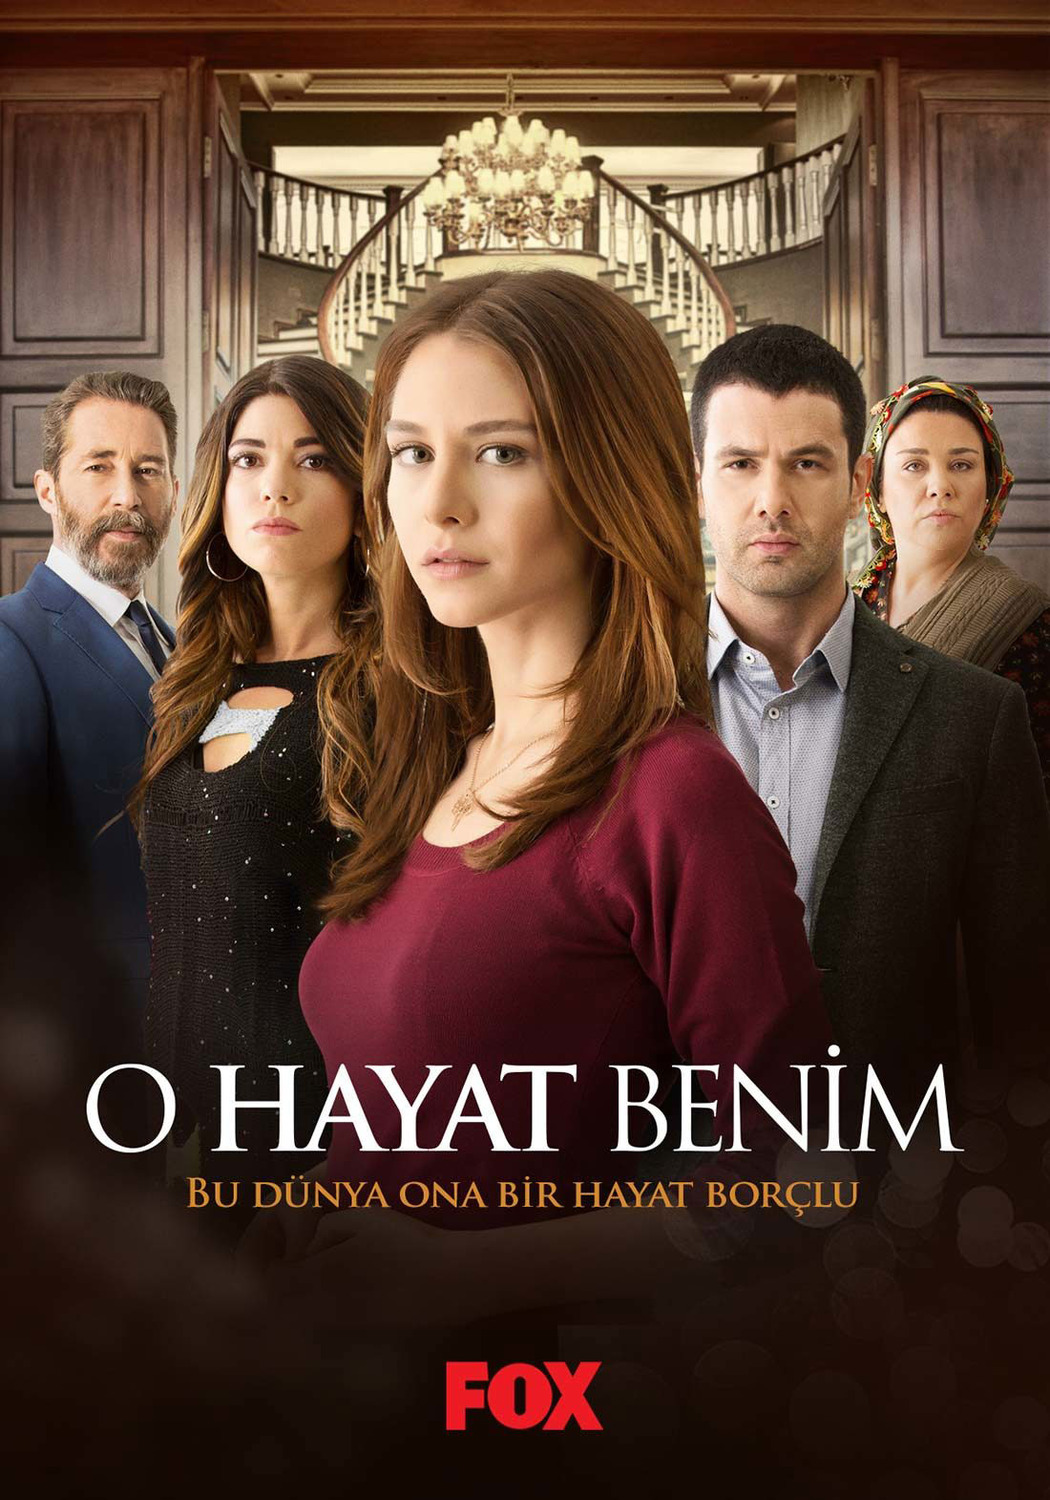 Extra Large TV Poster Image for O Hayat Benim (#1 of 4)